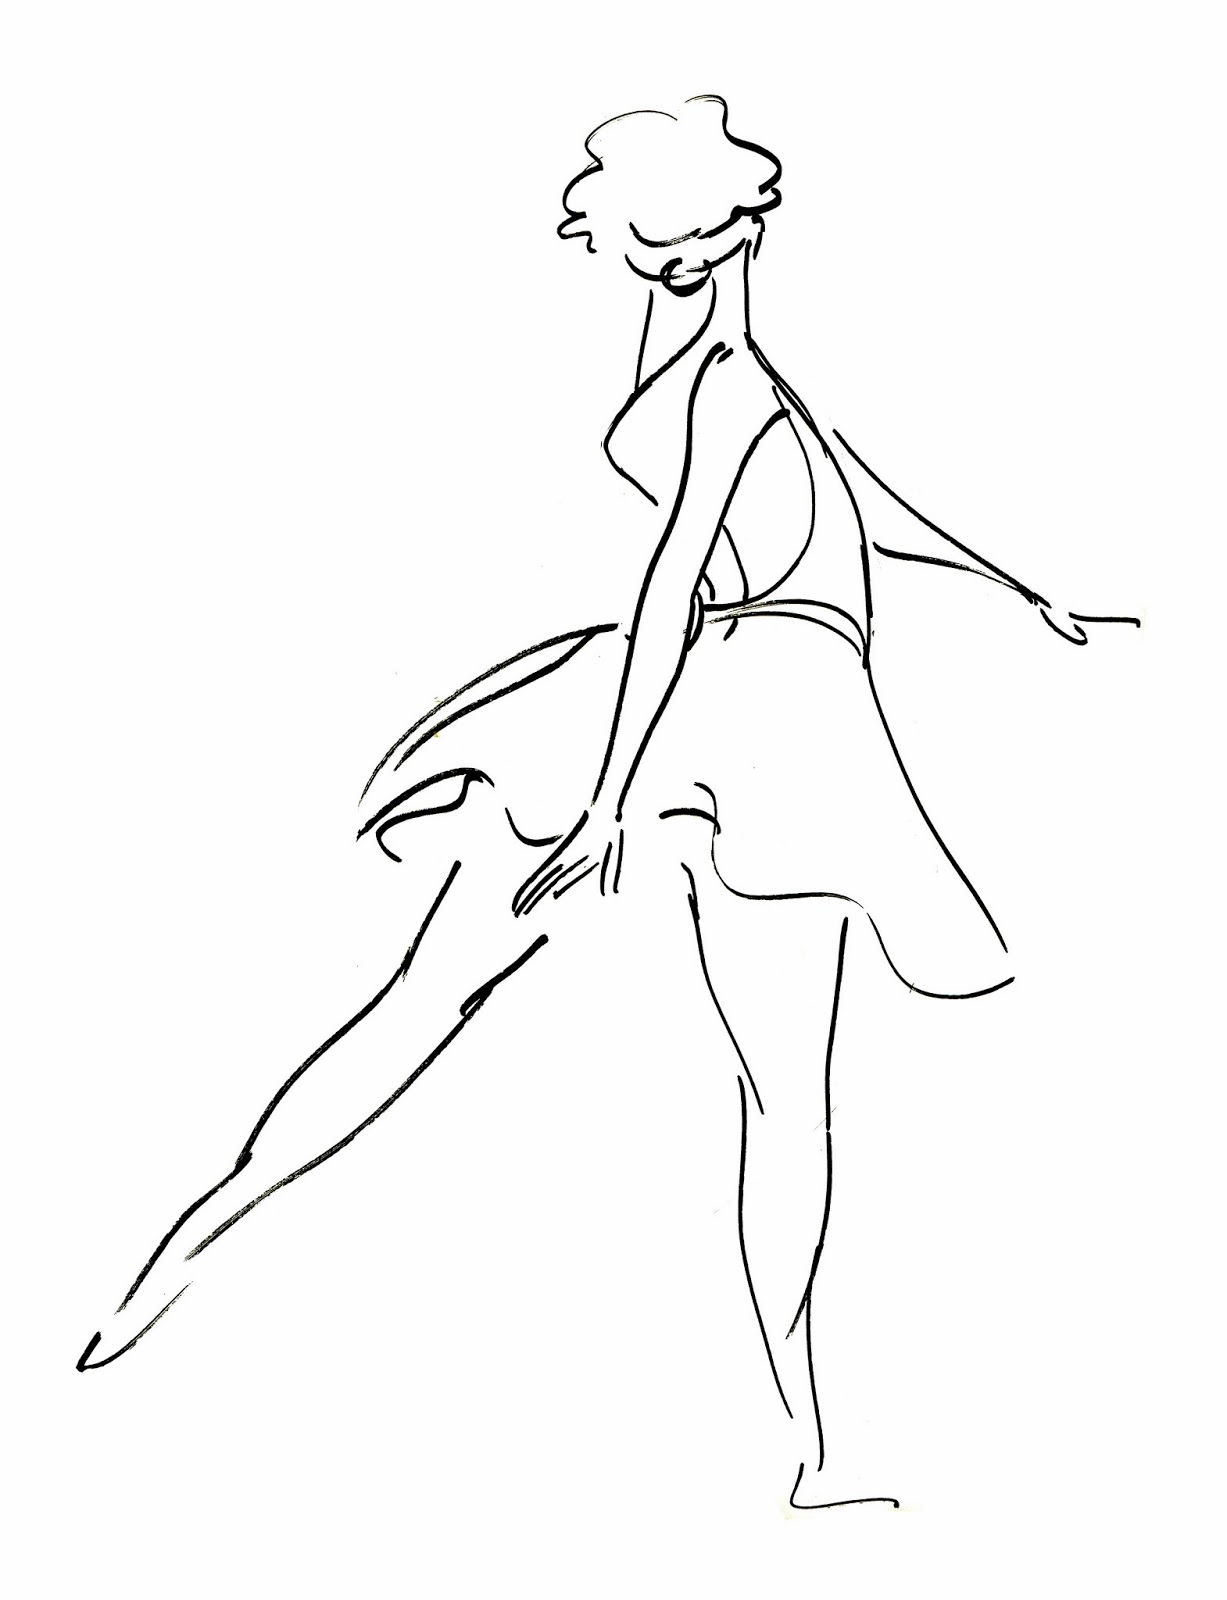 Dance Drawing